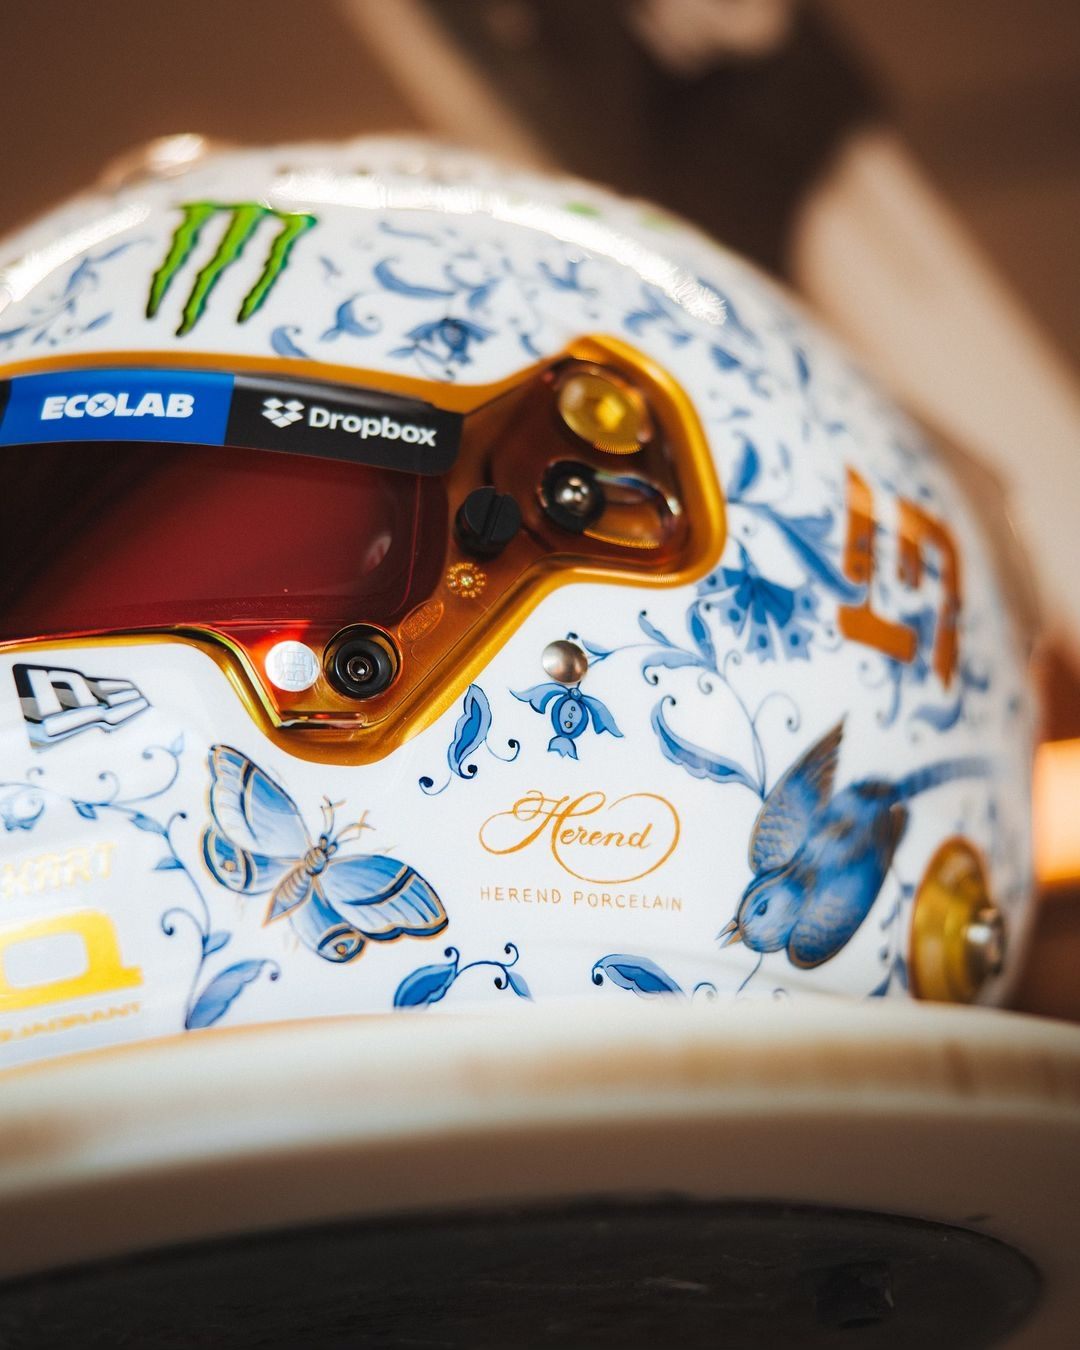 Шлем Ландо Норриса для Гран При Венгрии © Соцсети